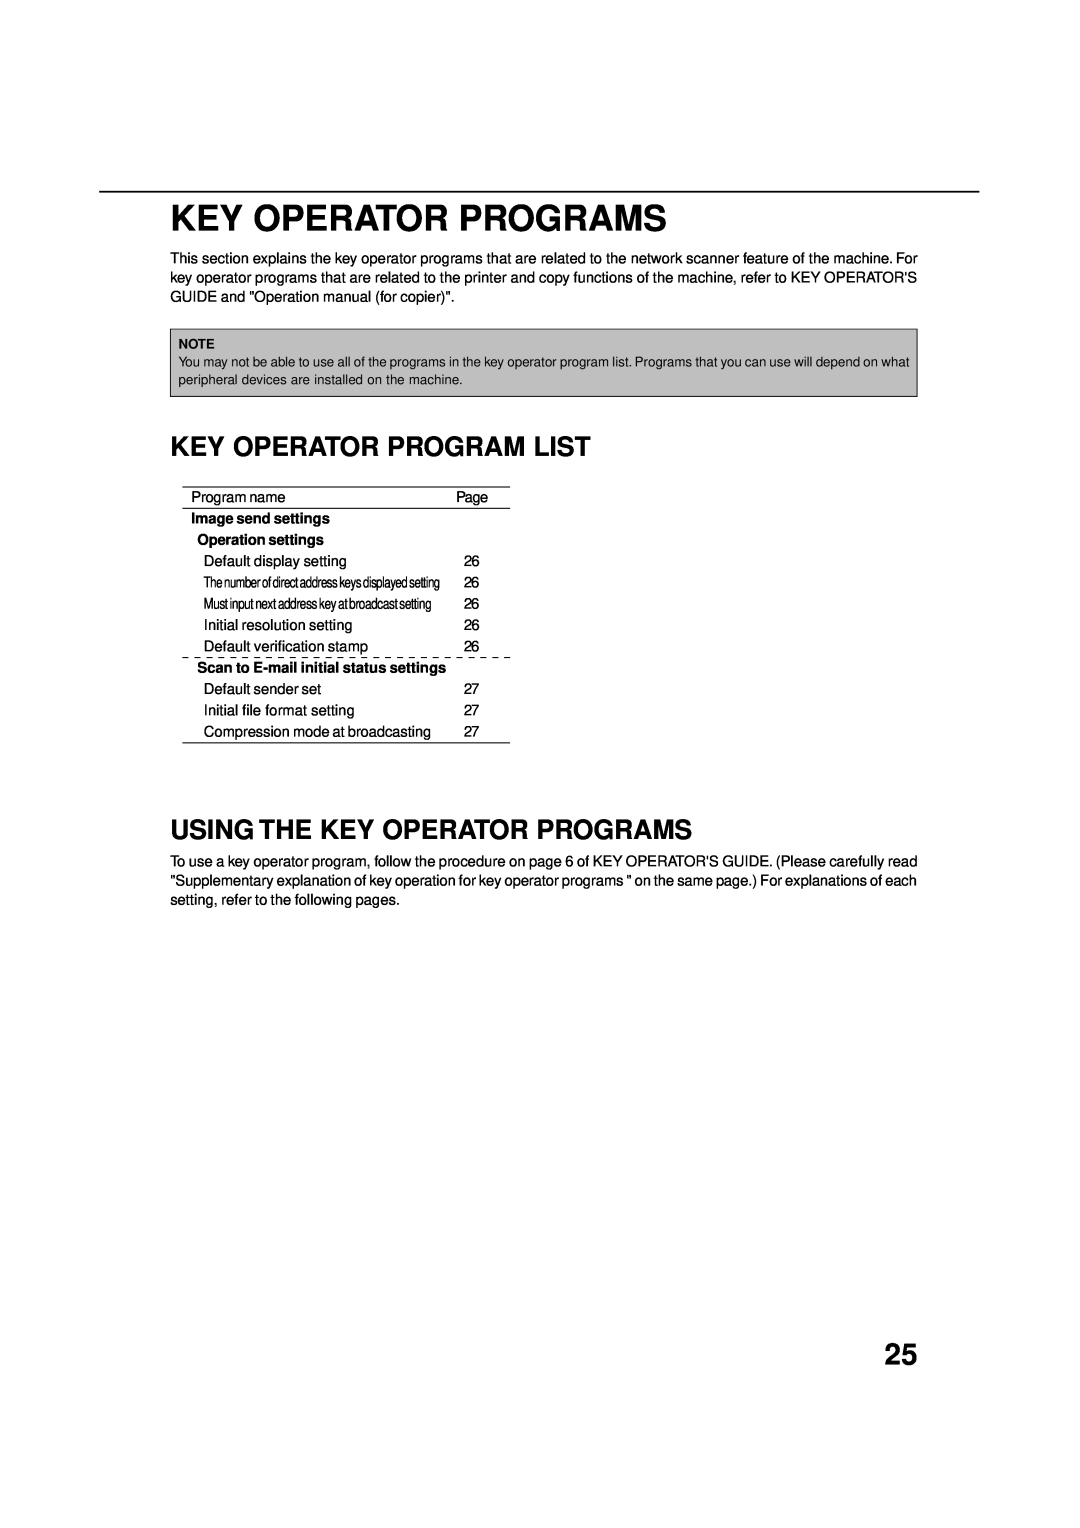 Sharp 4551, 4500 Key Operator Program List, Using The Key Operator Programs, Image send settings, Operation settings 